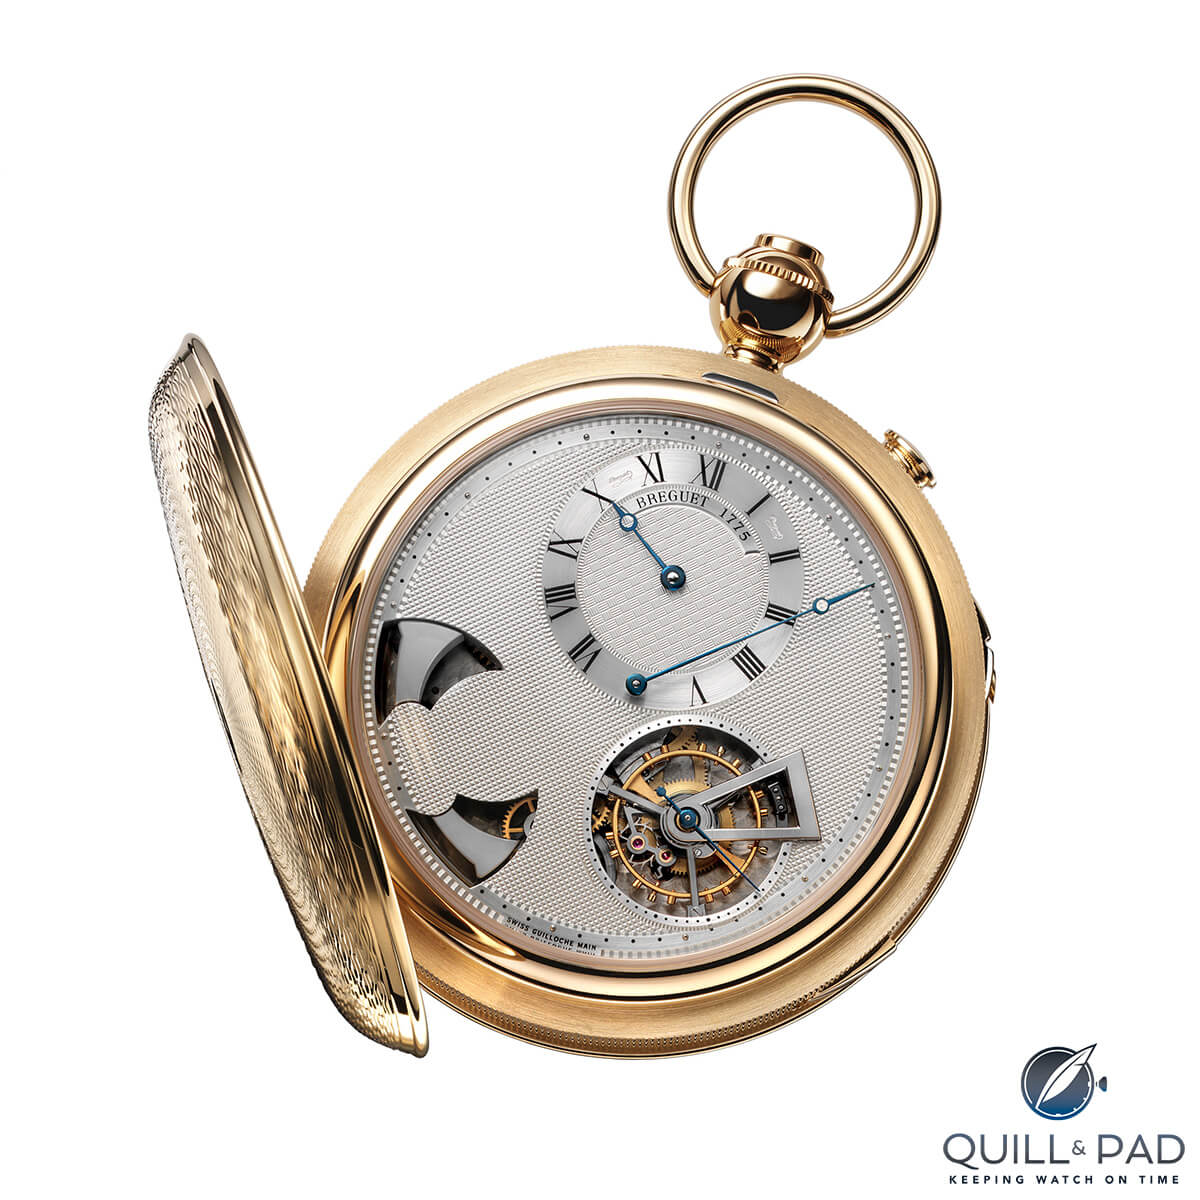 Breguet Reference 1907 pocket watch